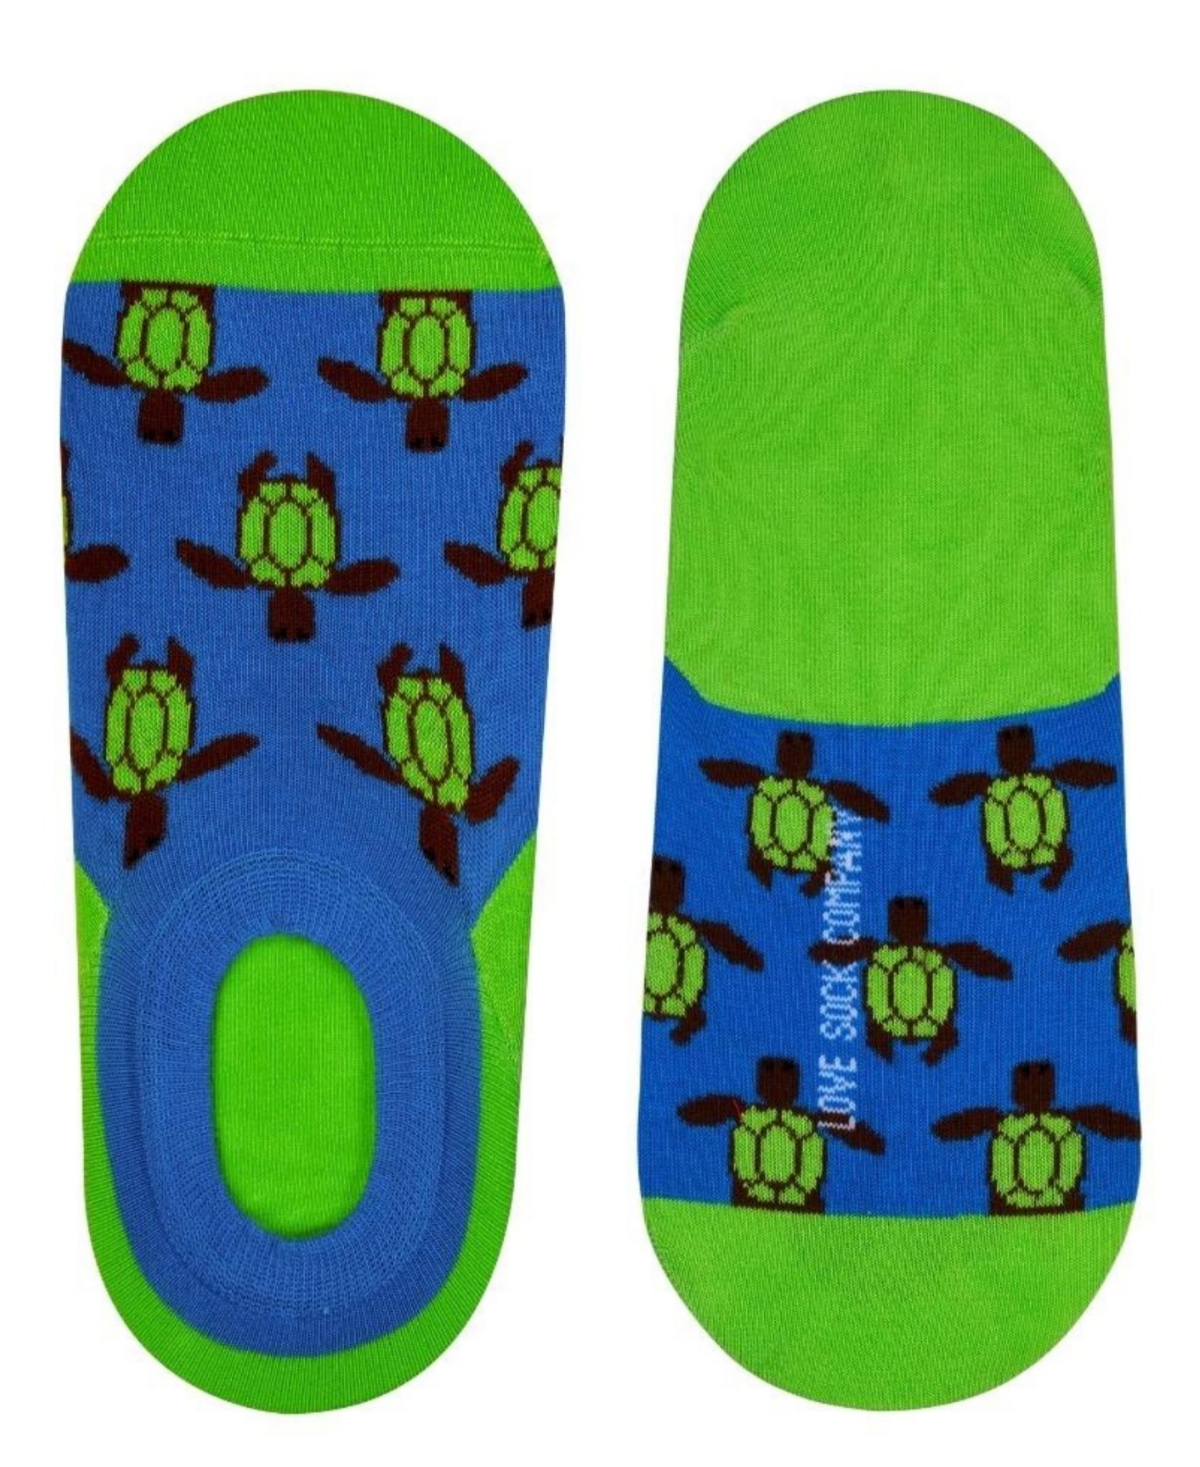 Men's Turtle Novelty No-Show Socks - Turquoise